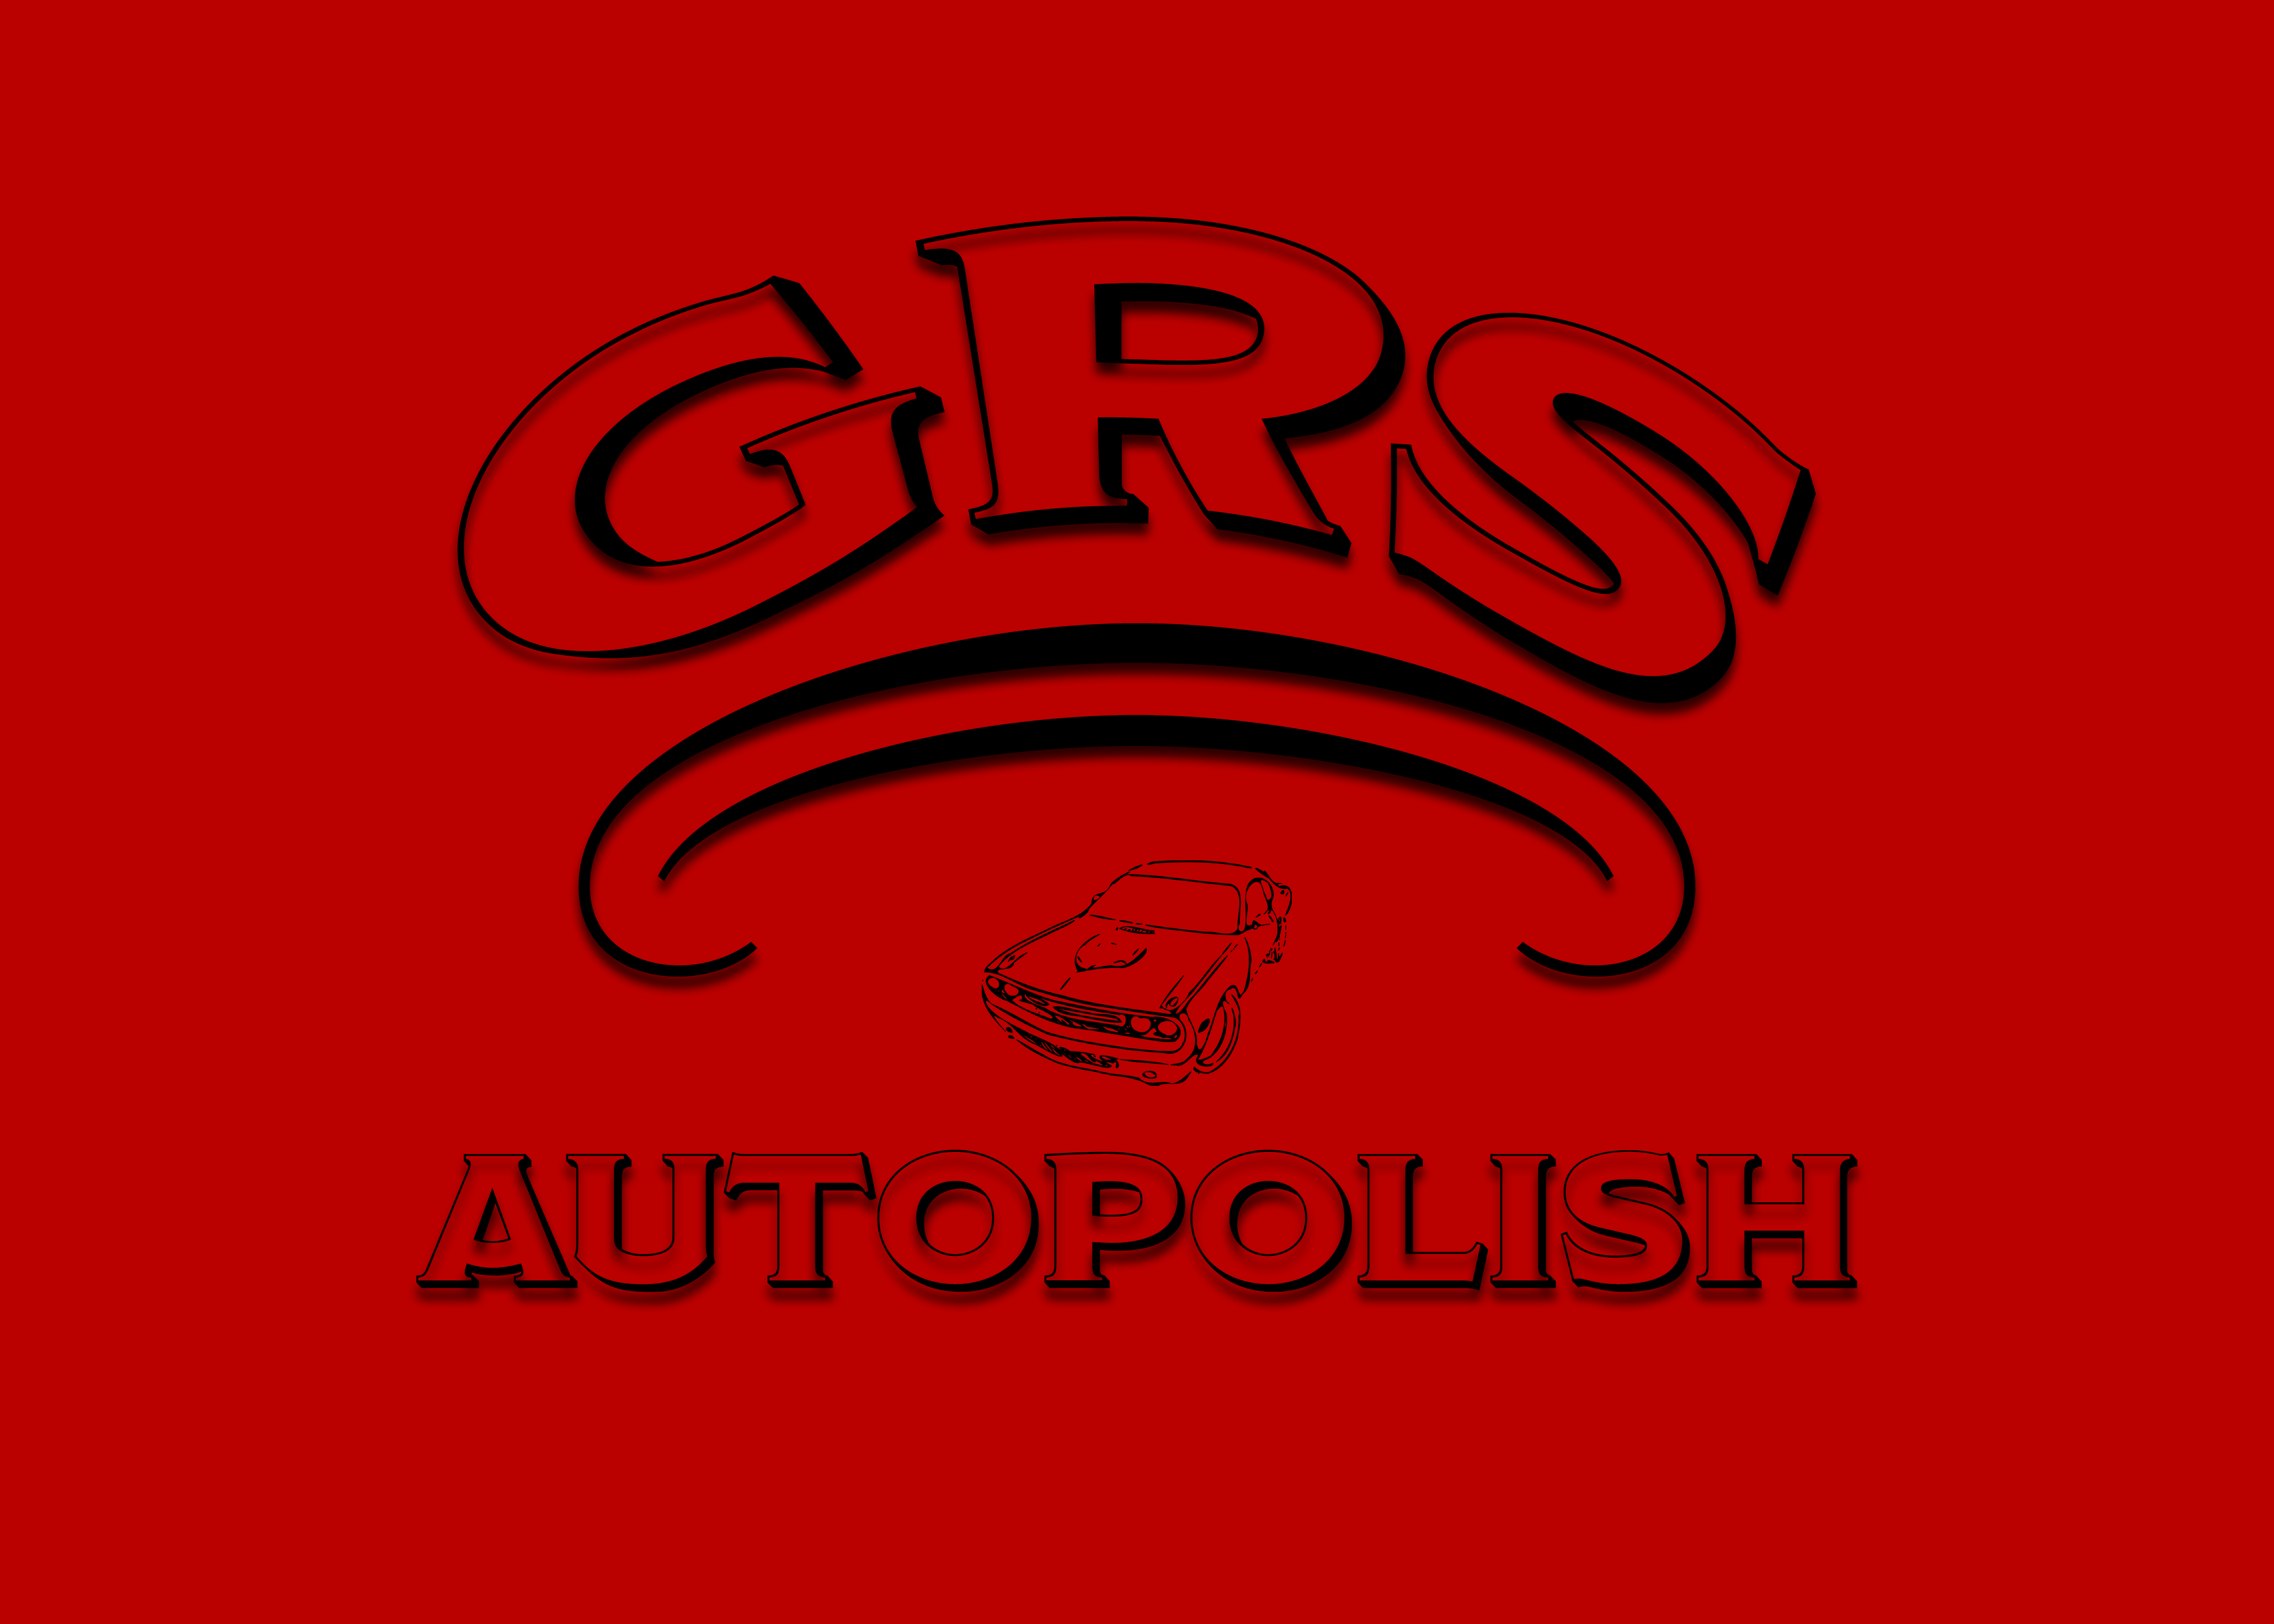 GRS Garage & Autopolish